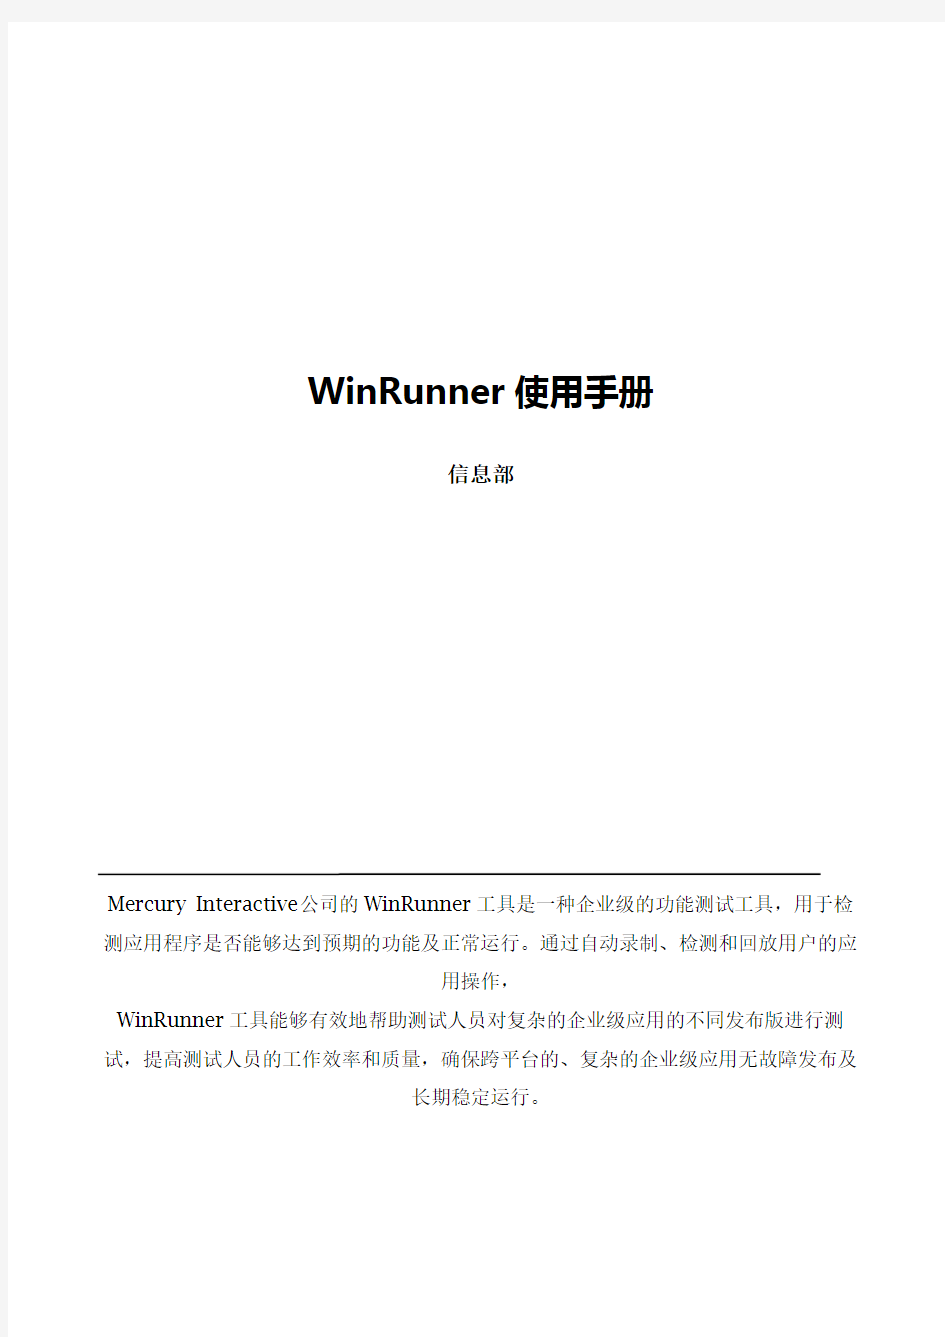 winrunner使用手册教学文案